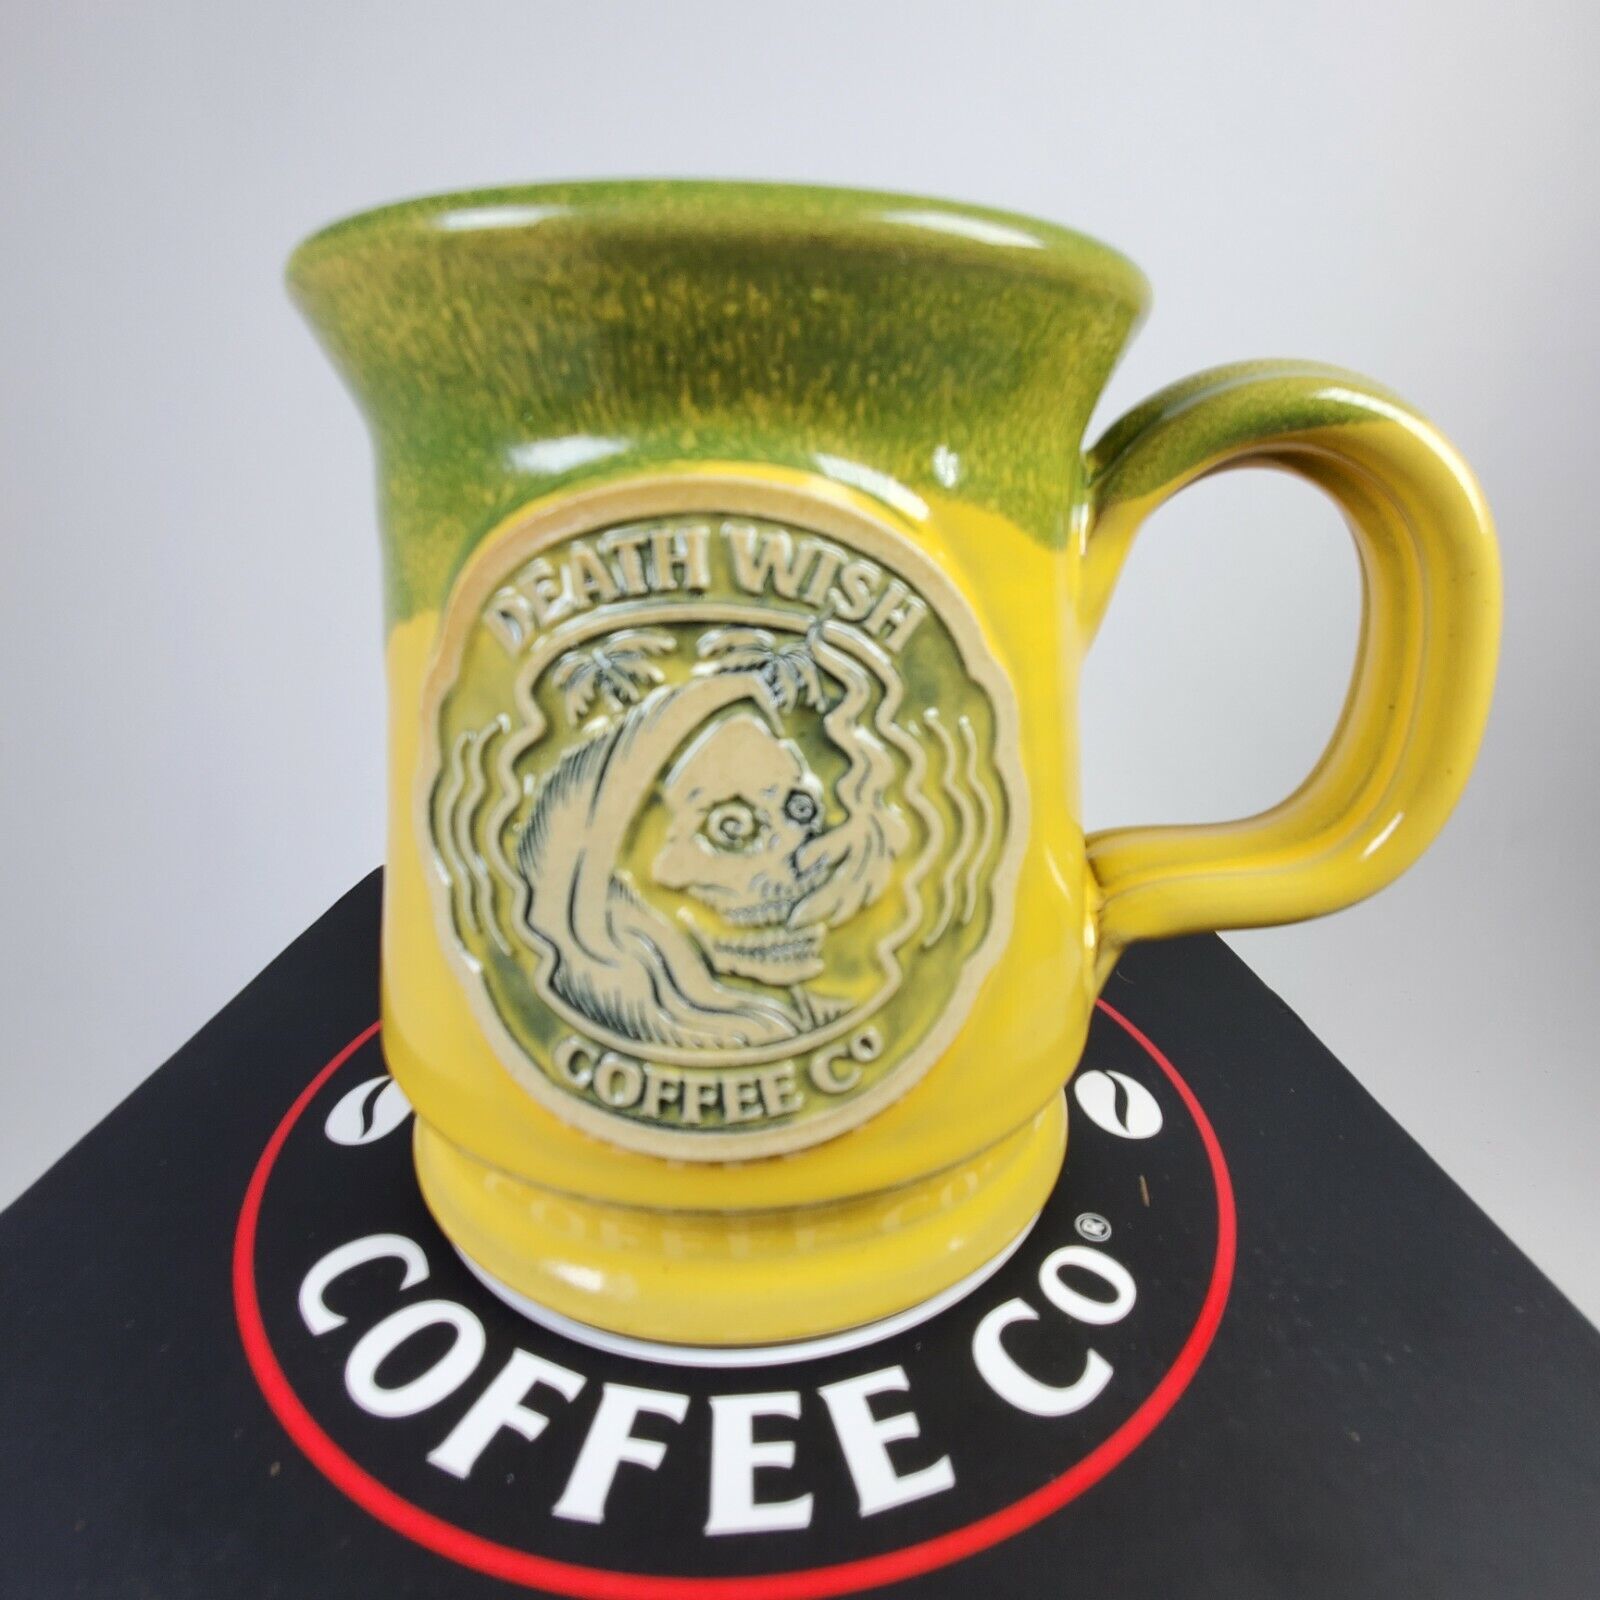 NEW- Death Wish Coffee Pineapple Espresso Dazed & Confused Mug #924/4284 Deneen